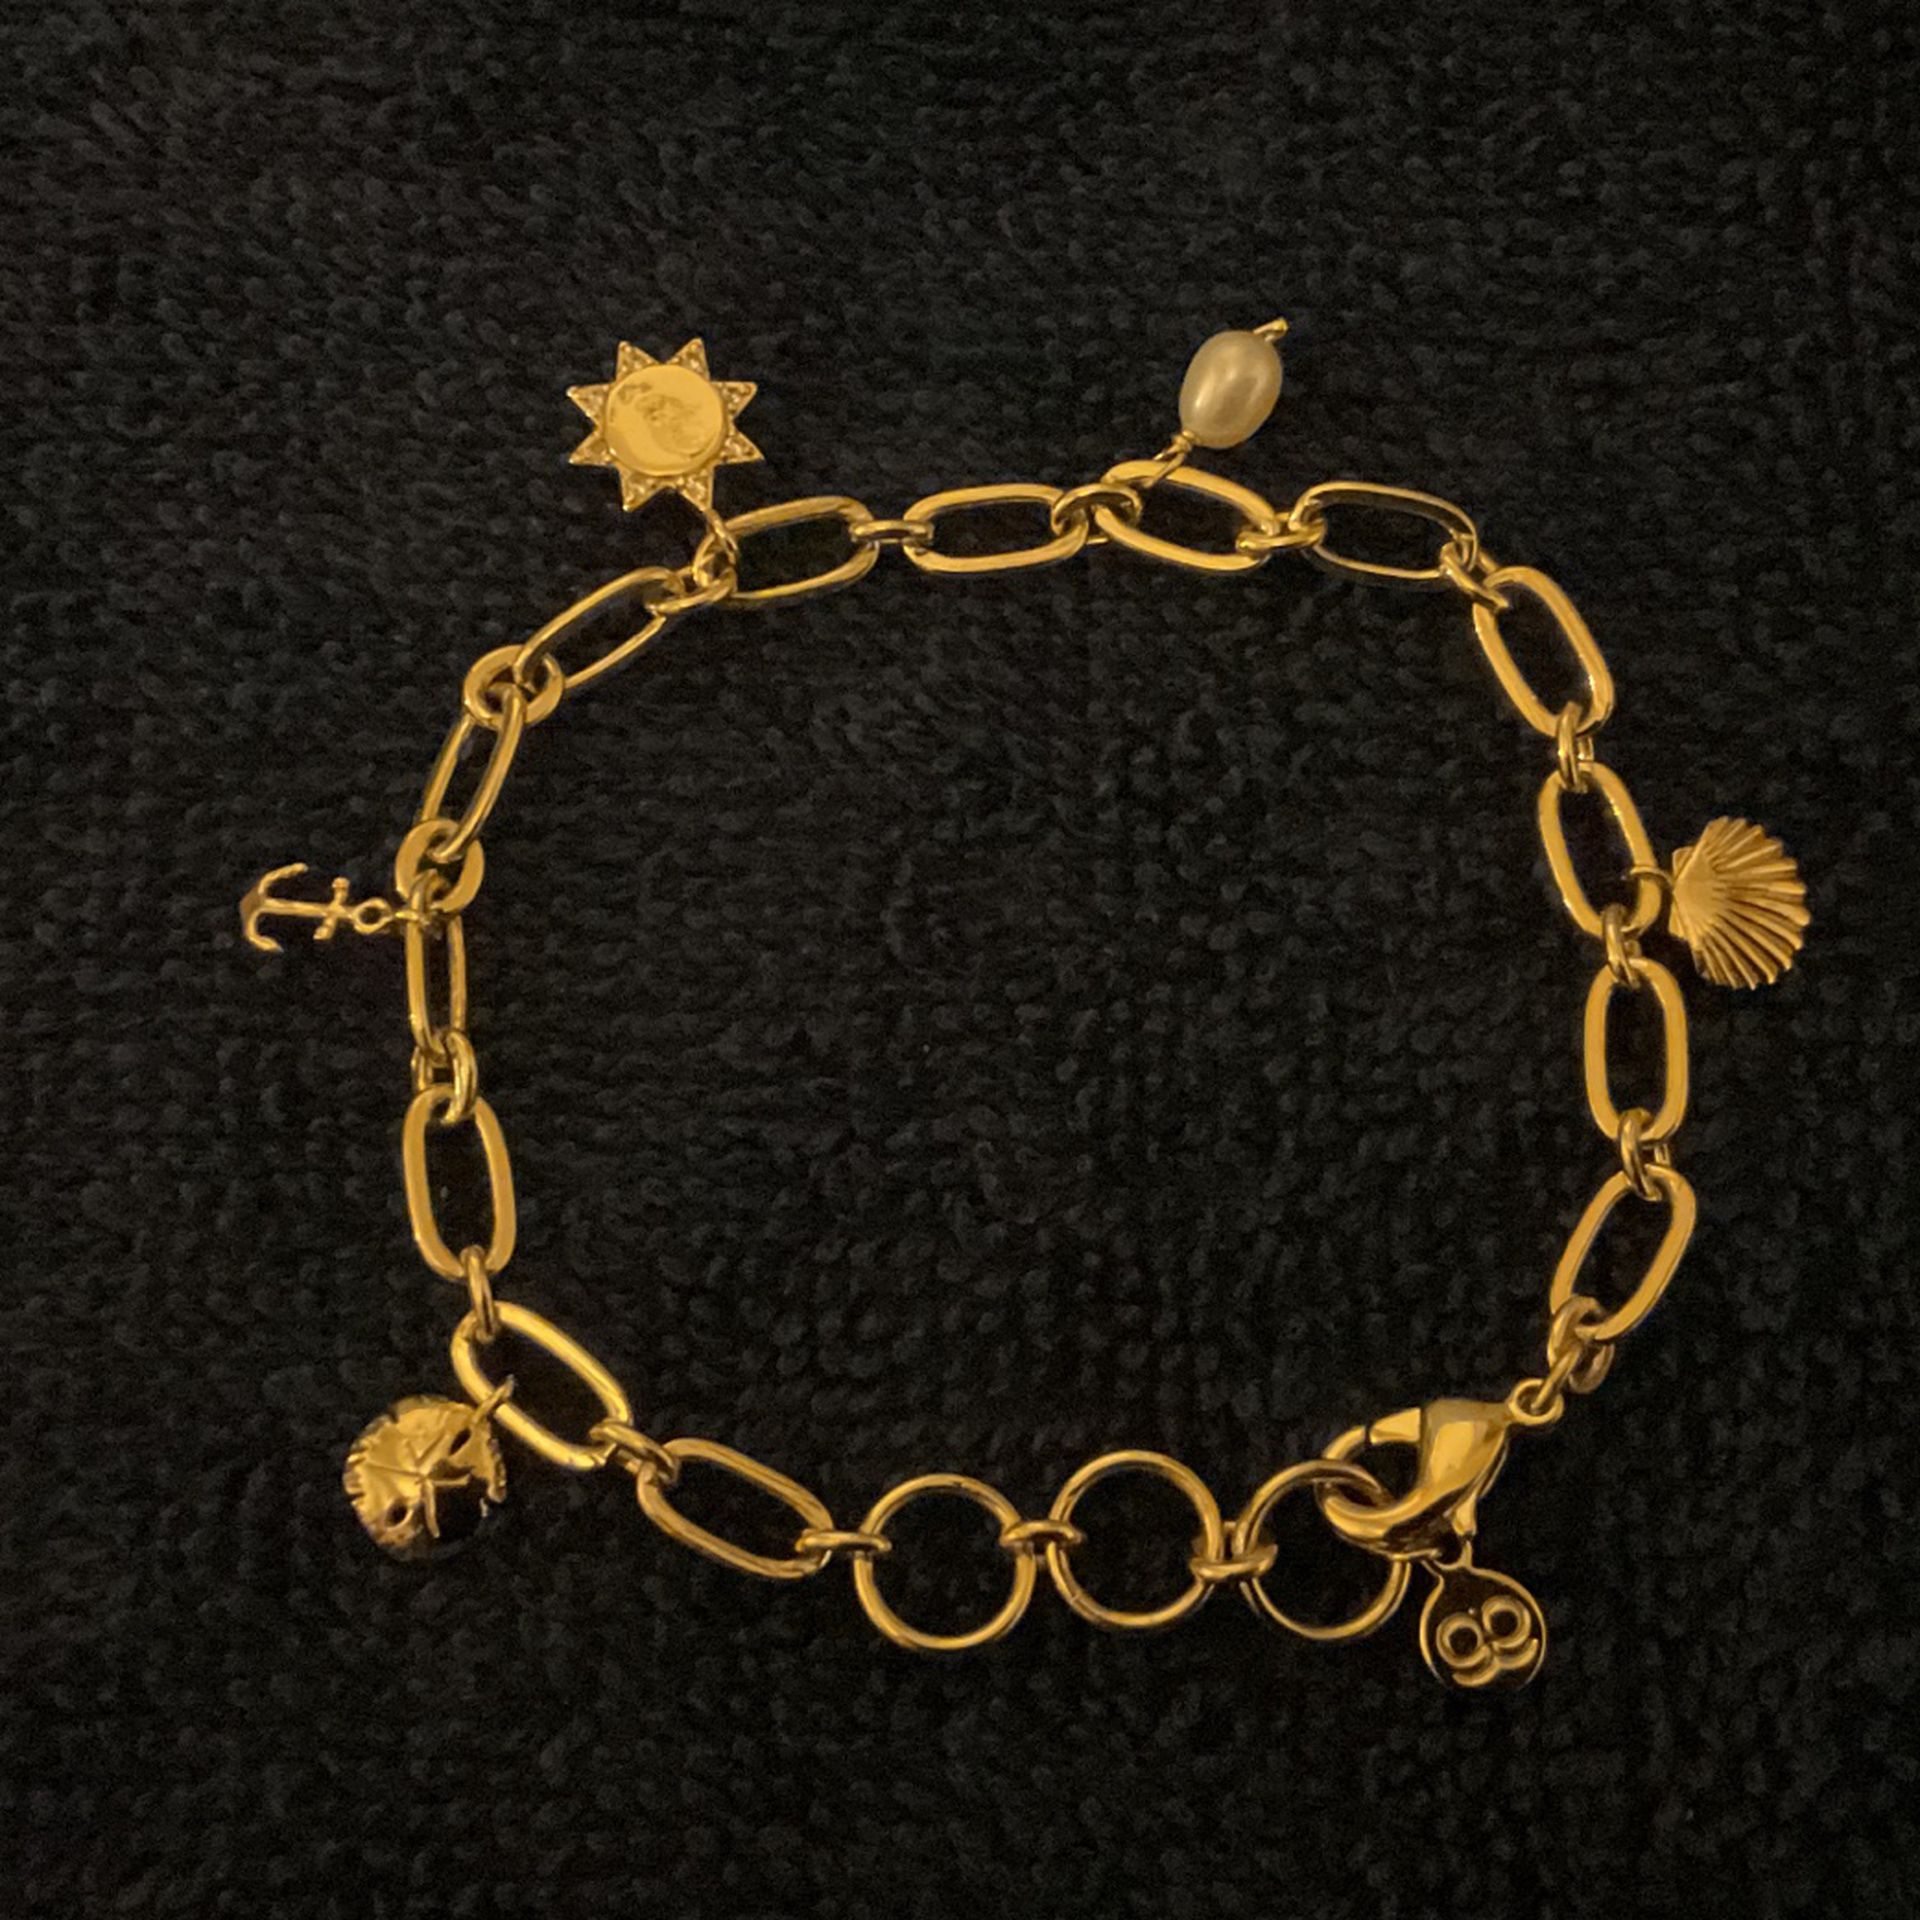 7” Goldtone Link Sea Charm Bracelet,By Gorjana( gg)